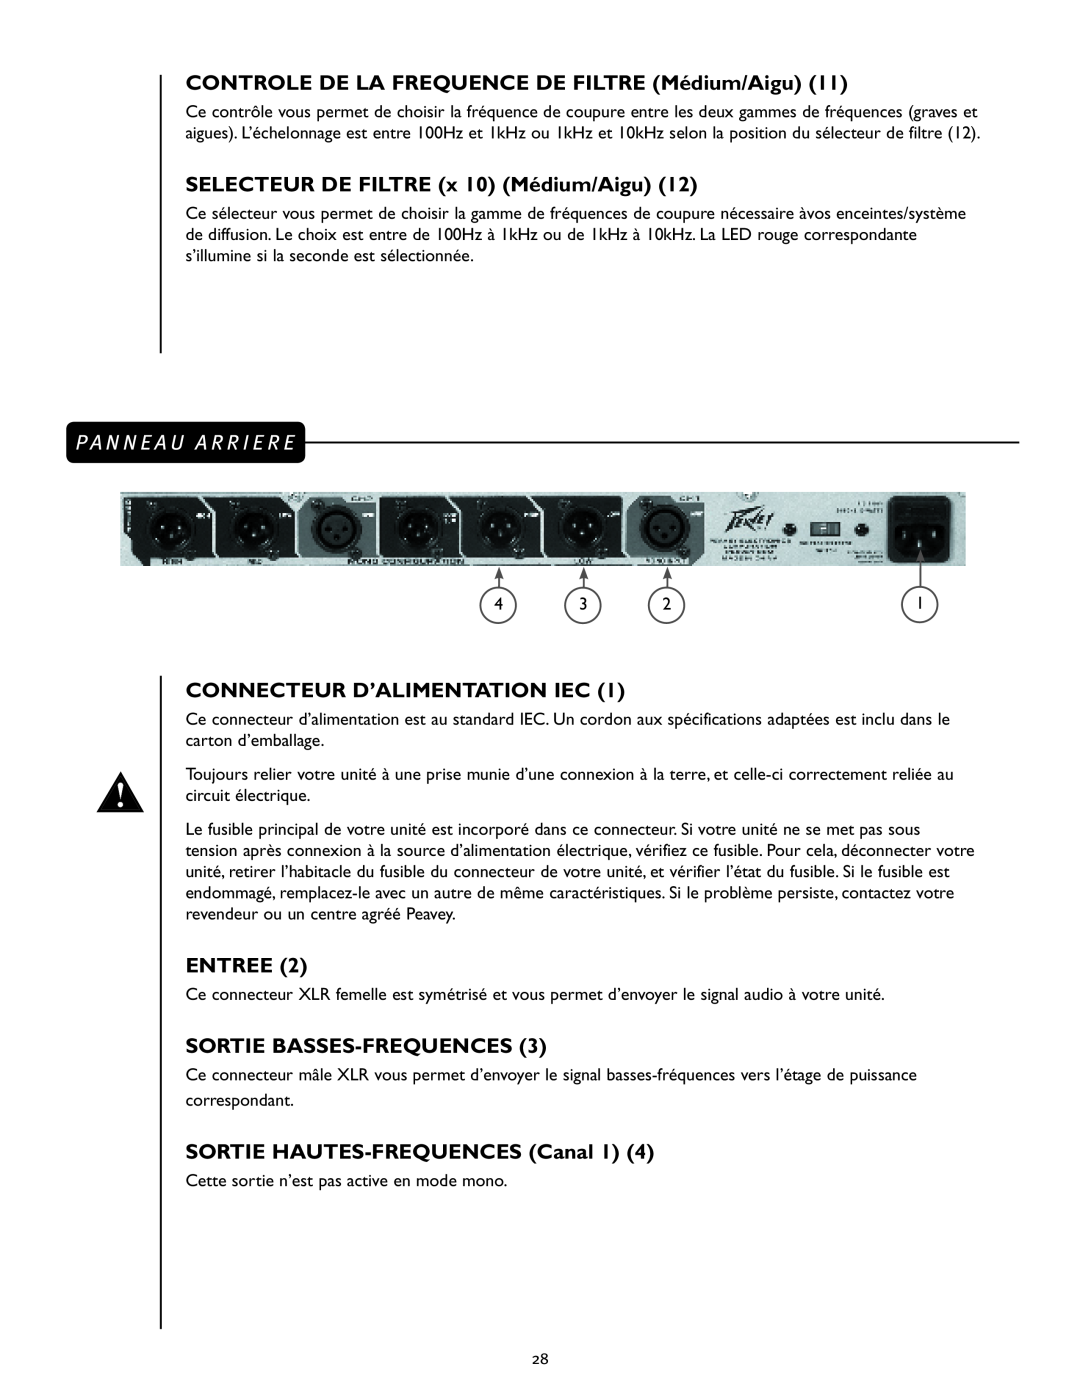 Peavey 23XO manual CONTROLE DE LA FREQUENCE DE FILTRE Médium/Aigu, SELECTEUR DE FILTRE x 10 Médium/Aigu, Entree 